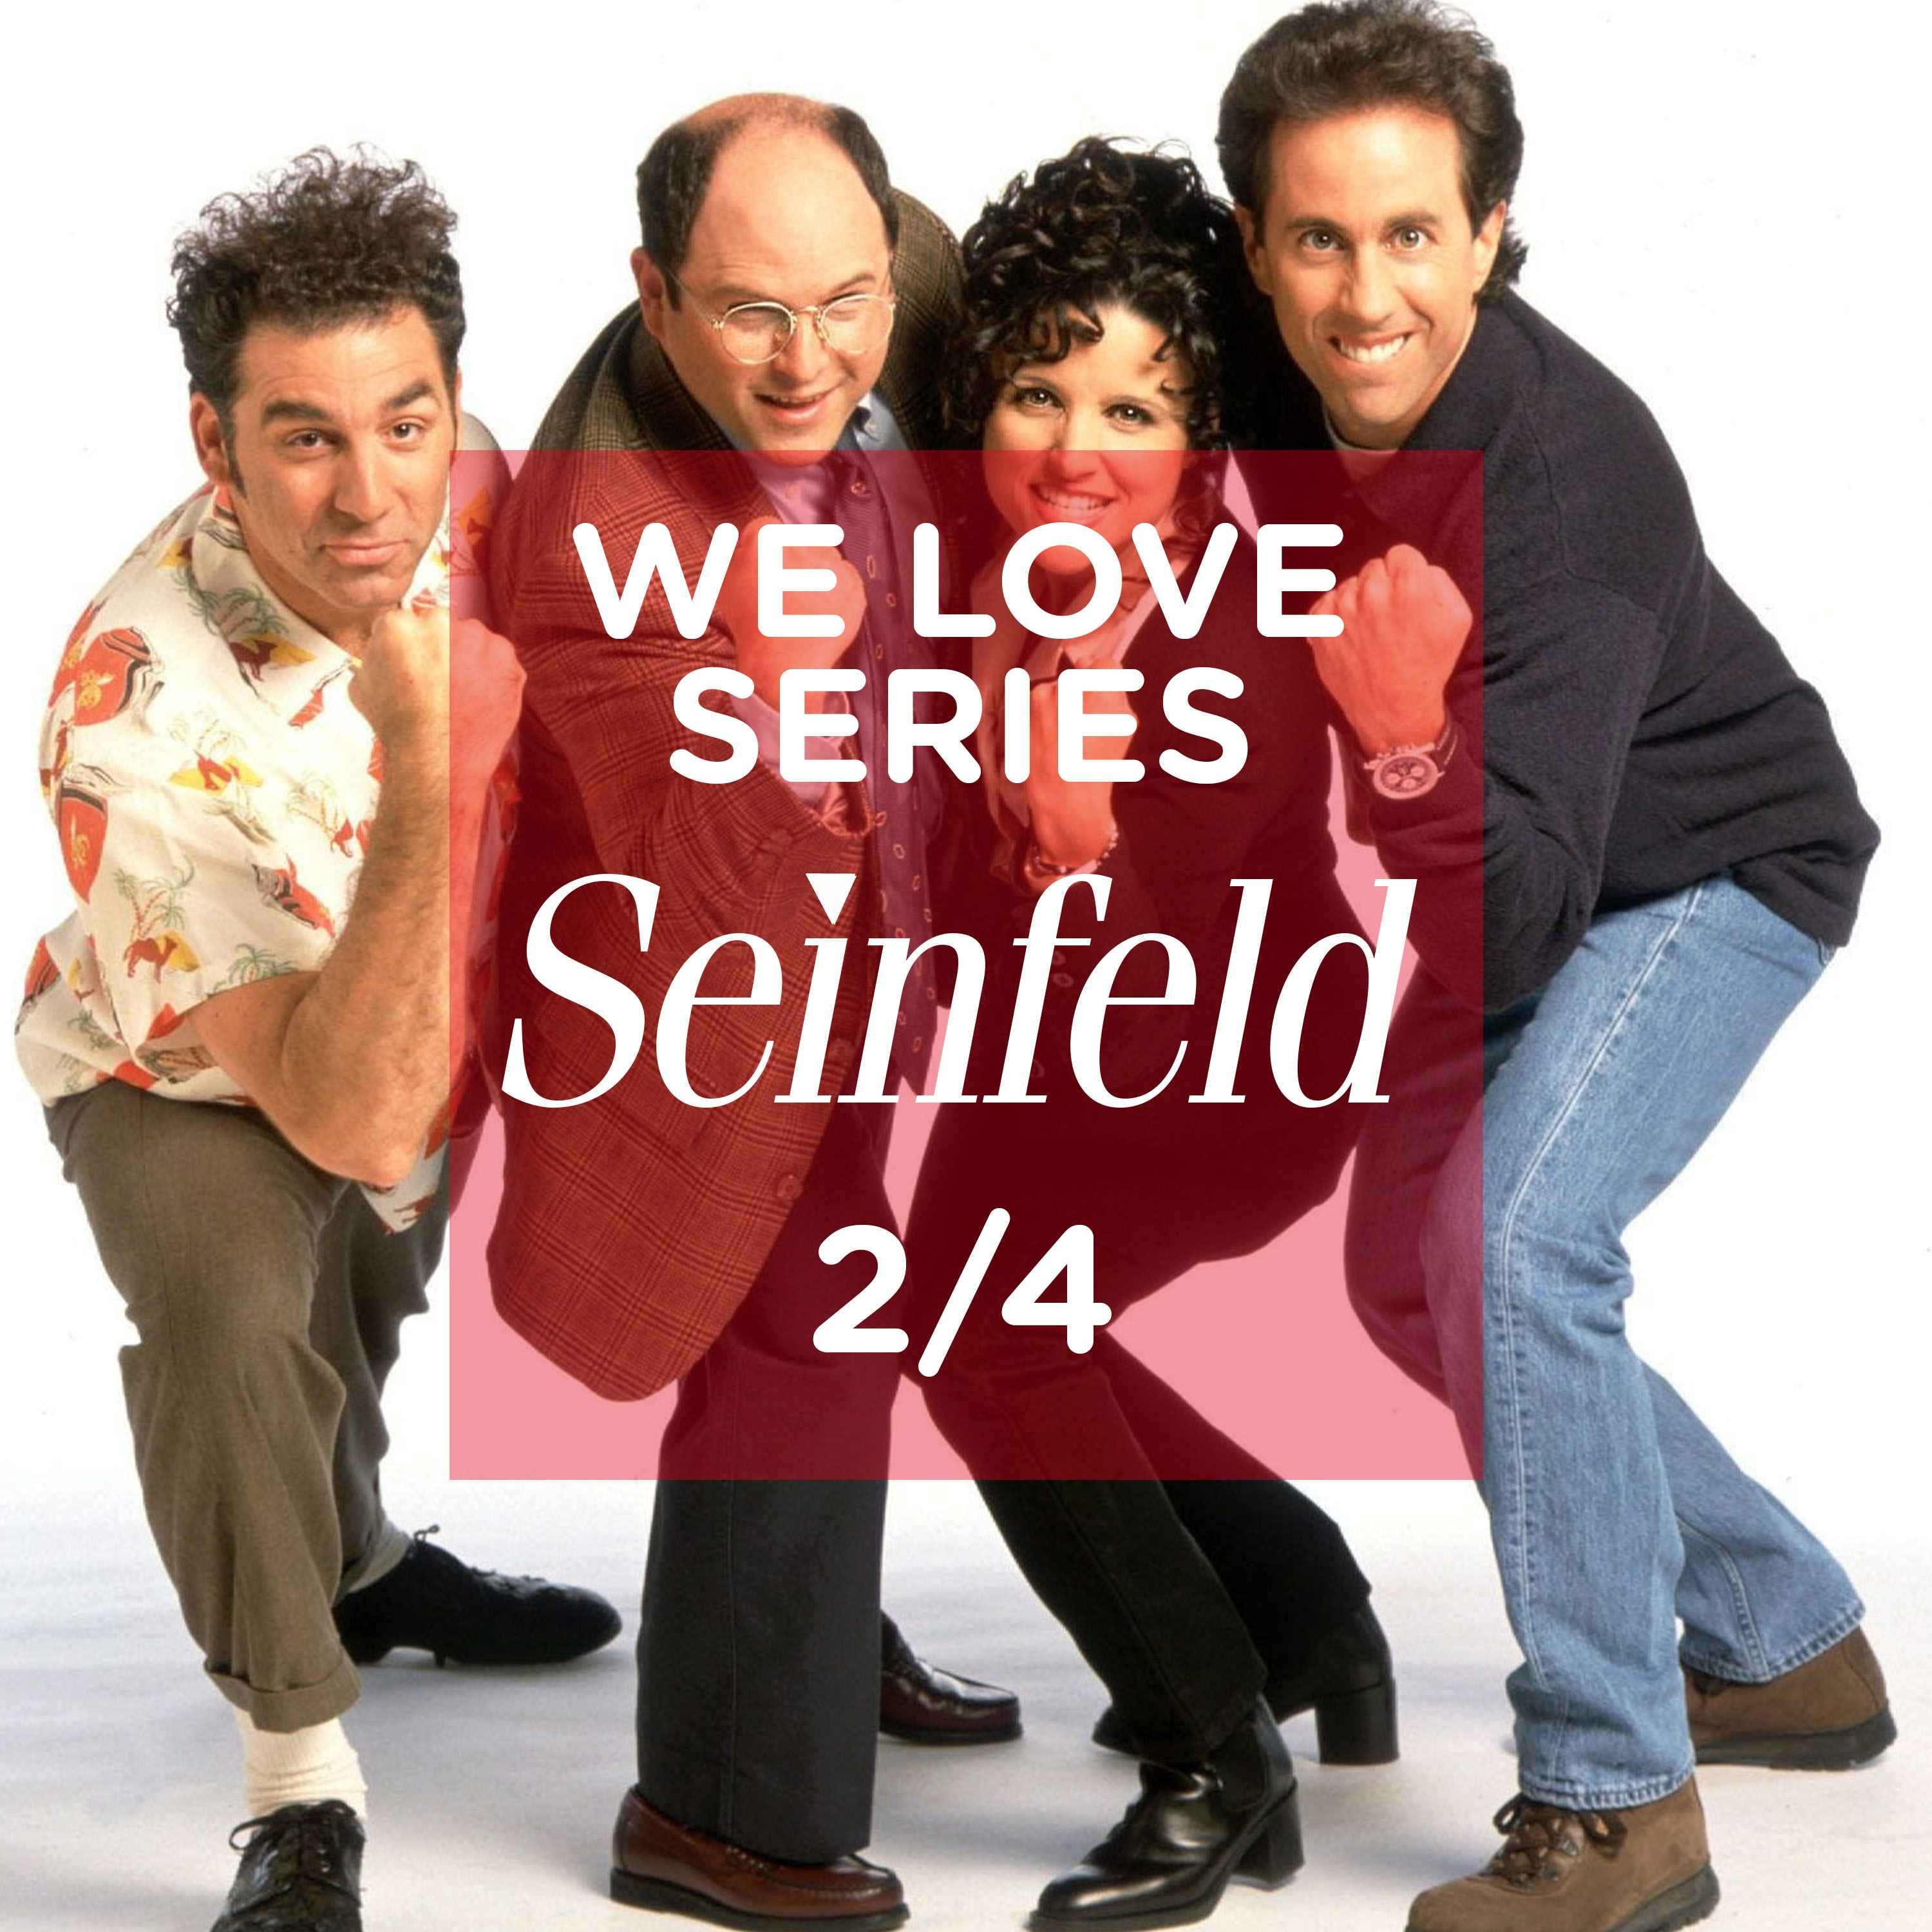 Seinfeld 2/4